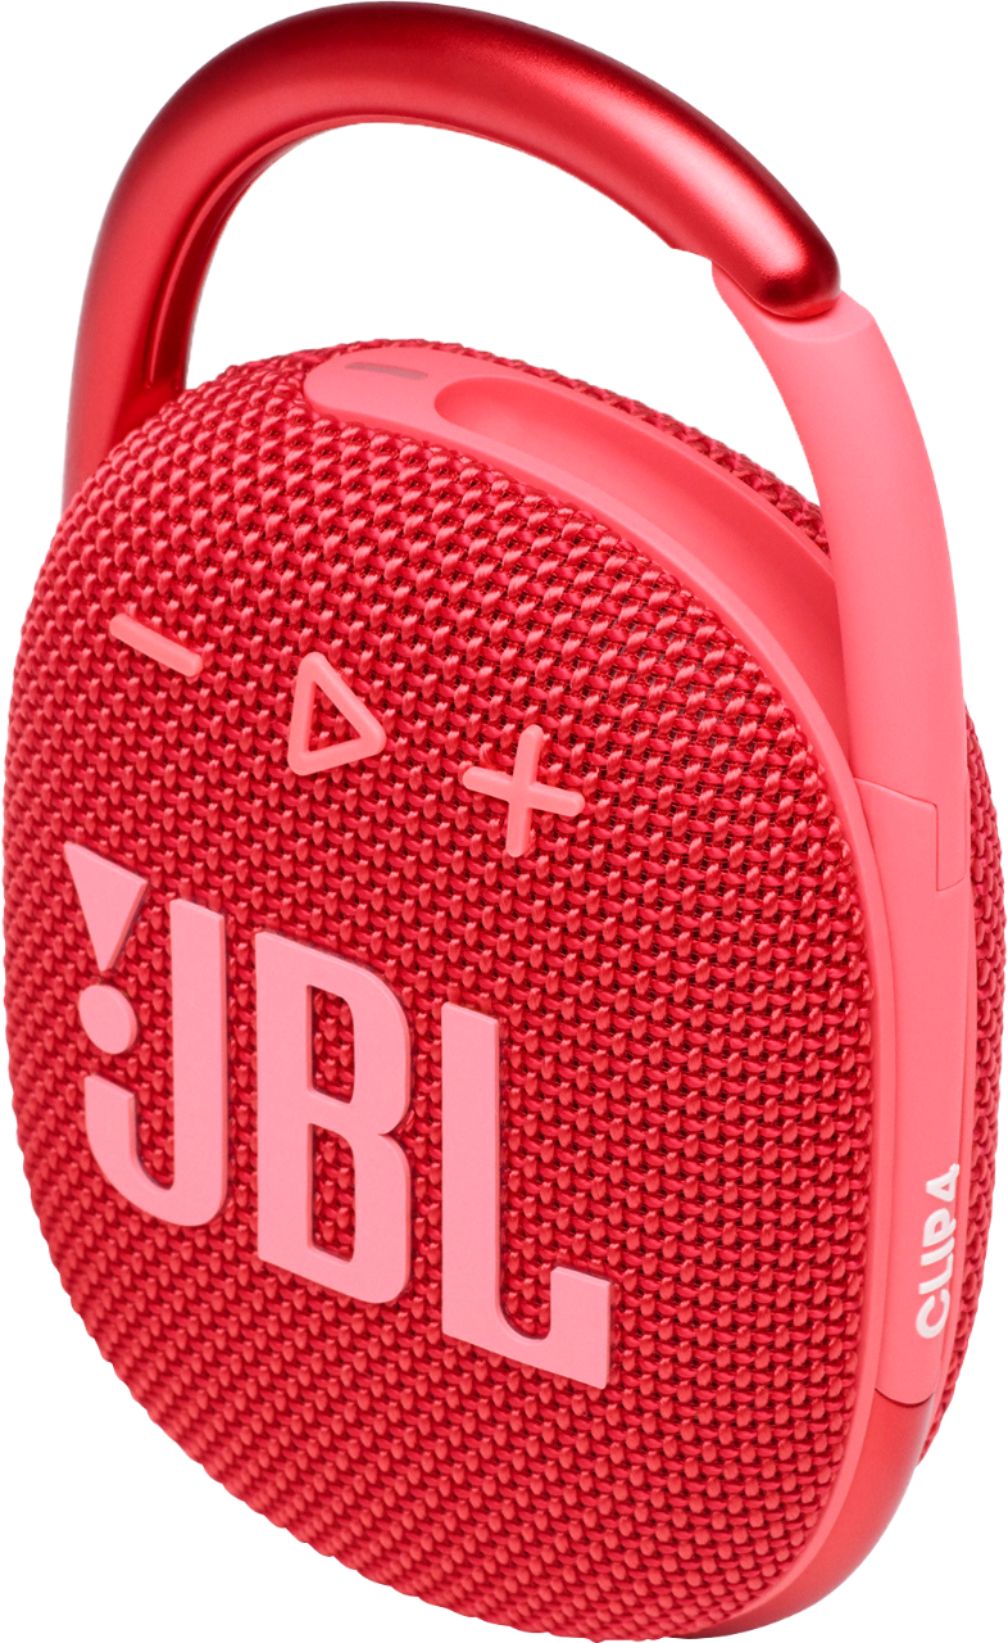 JBL - CLIP4 Portable Bluetooth Speaker - Red_2